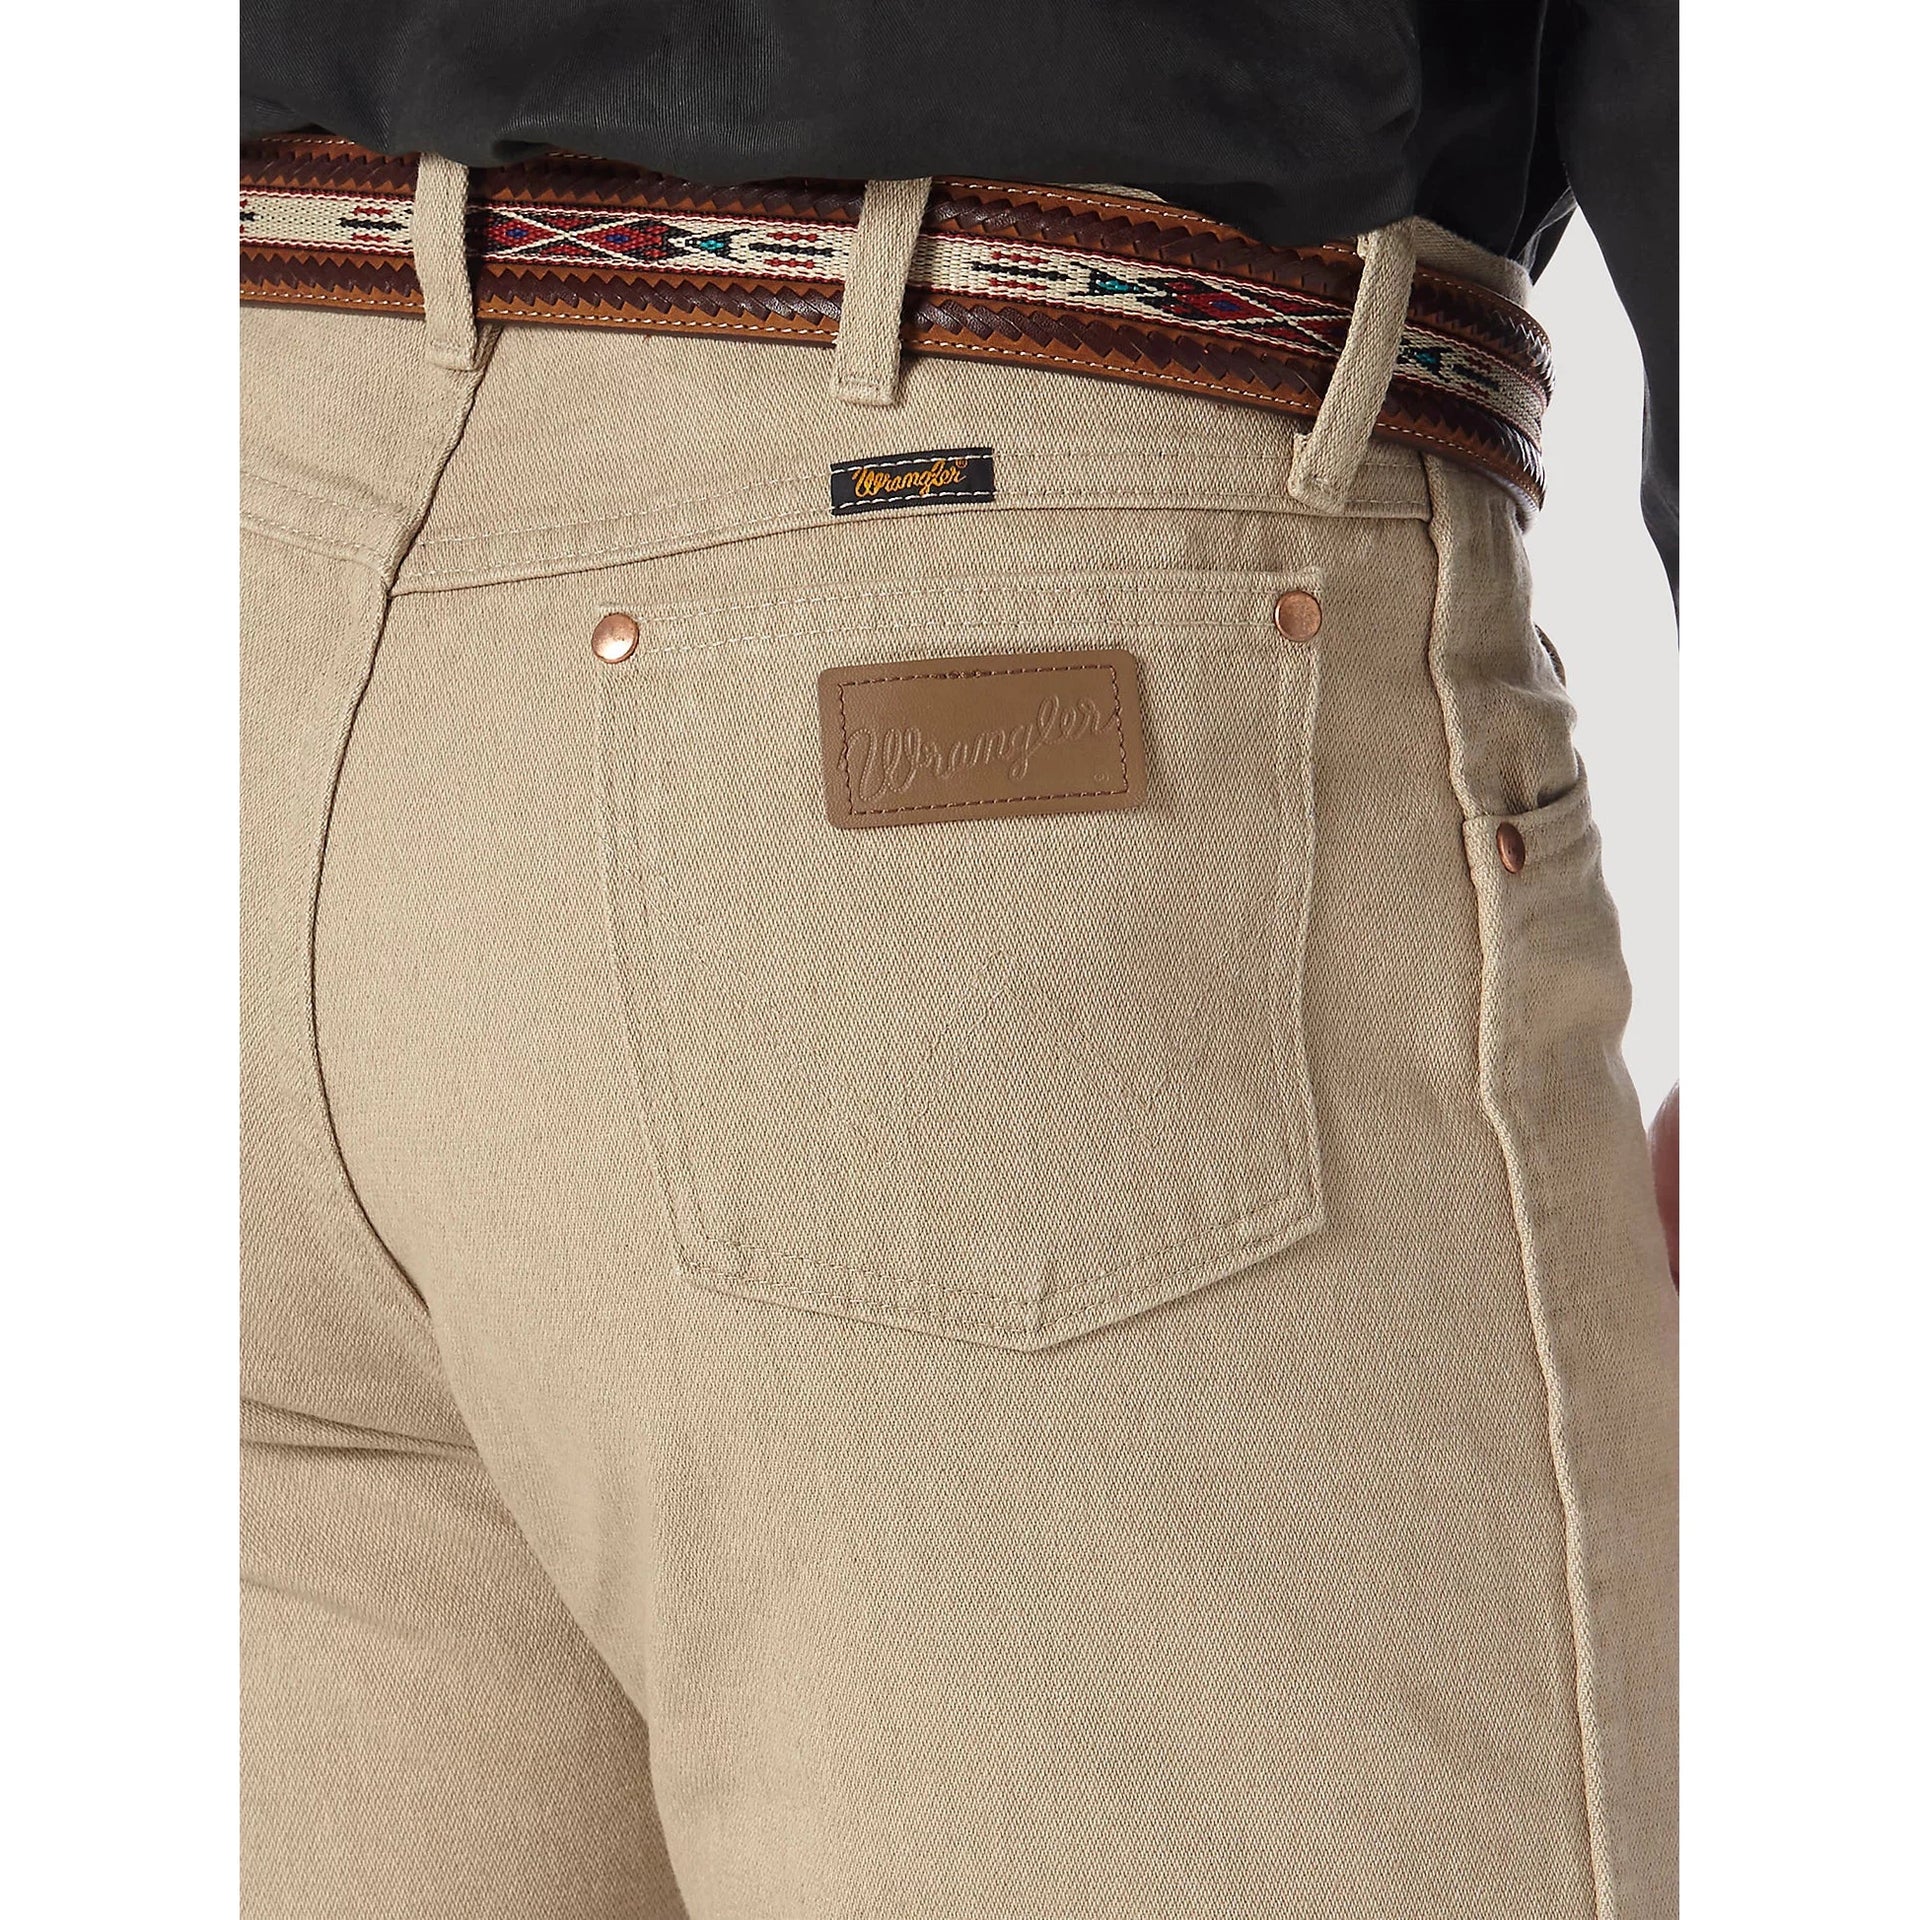 Product Name: Wrangler 13MWZ Cowboy Cut Original Fit Jeans - Prewashed  Colors